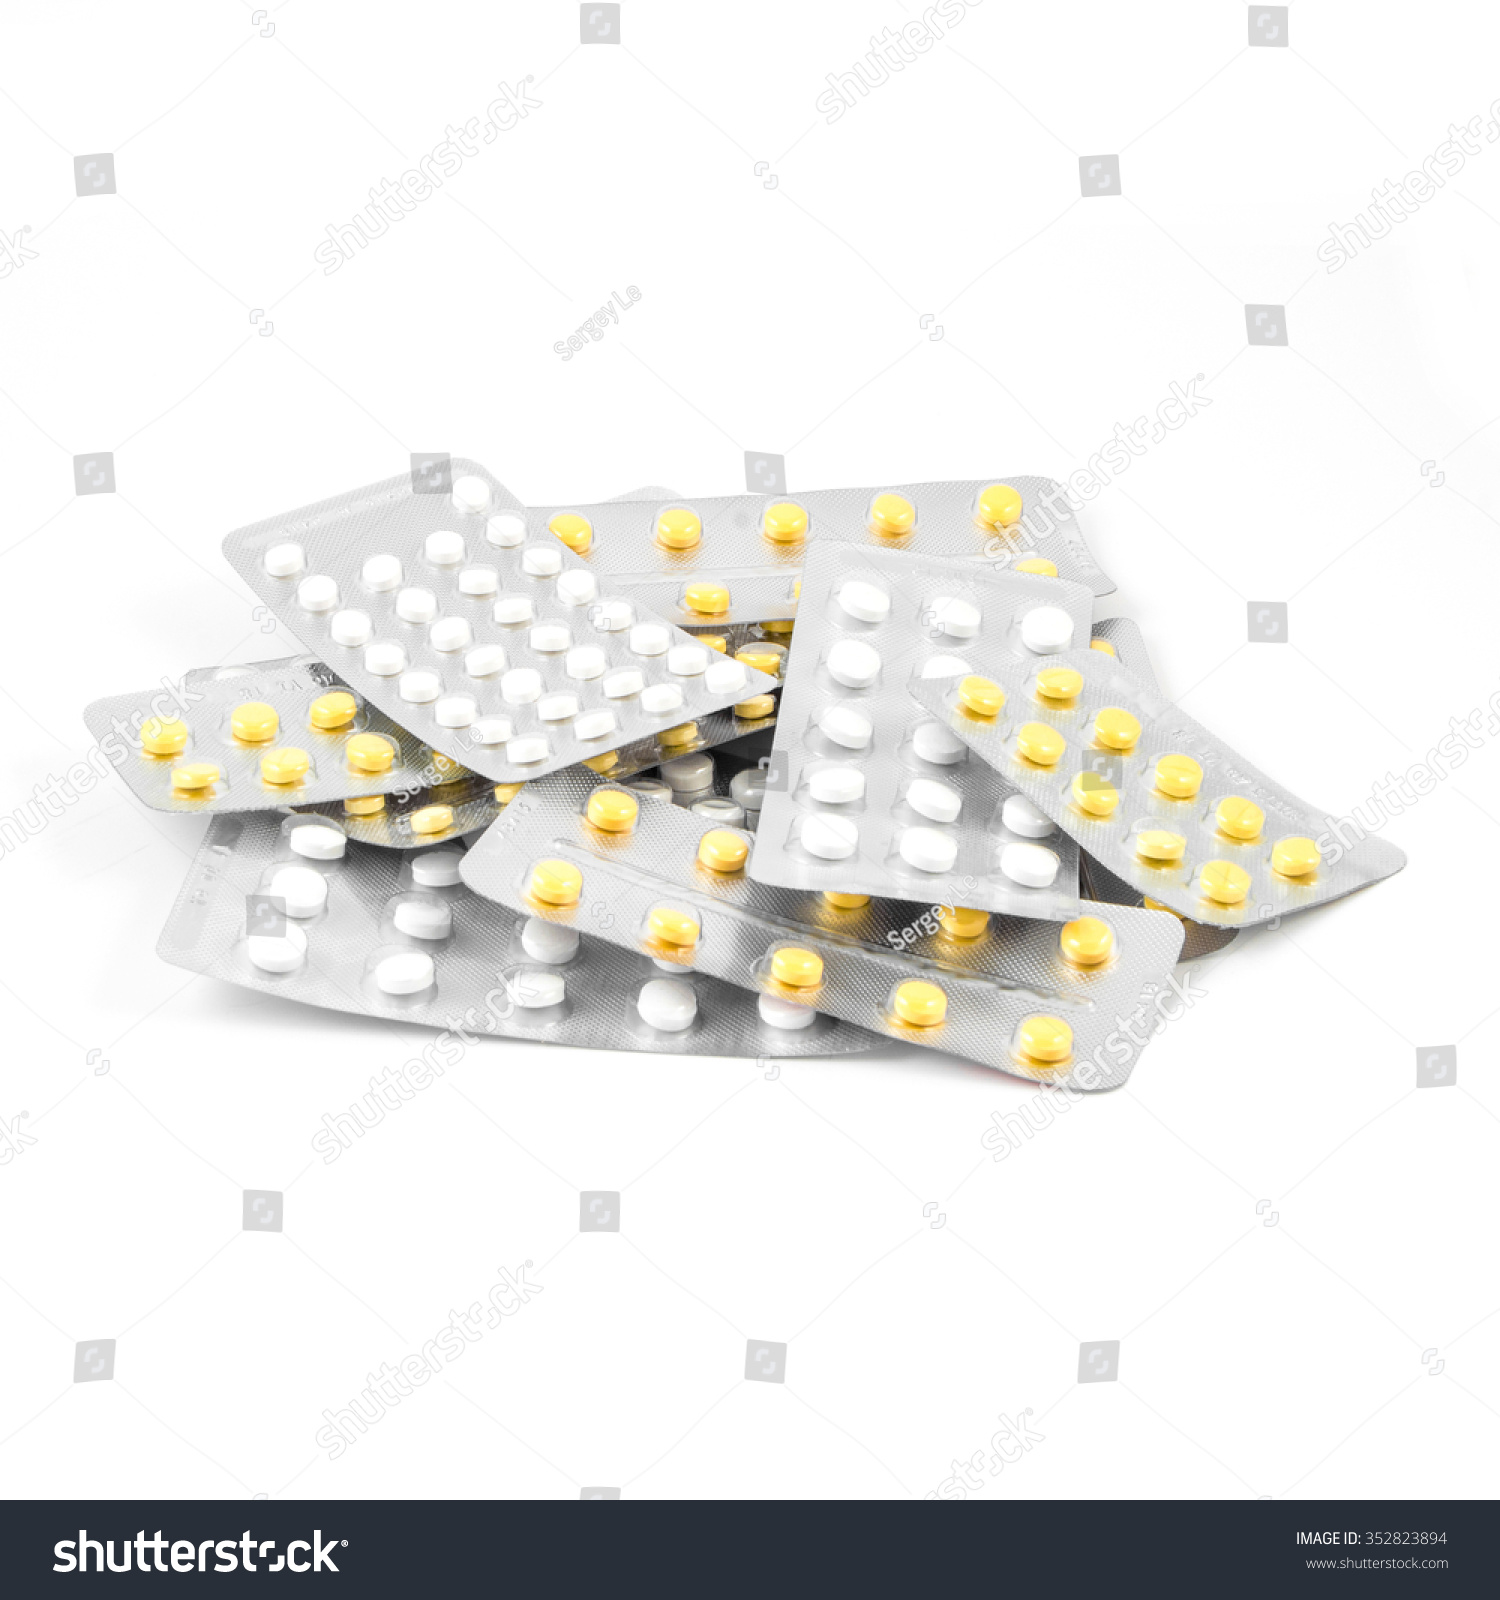 Packs Pills Isolated On White Background Stock Photo 352823894 ...